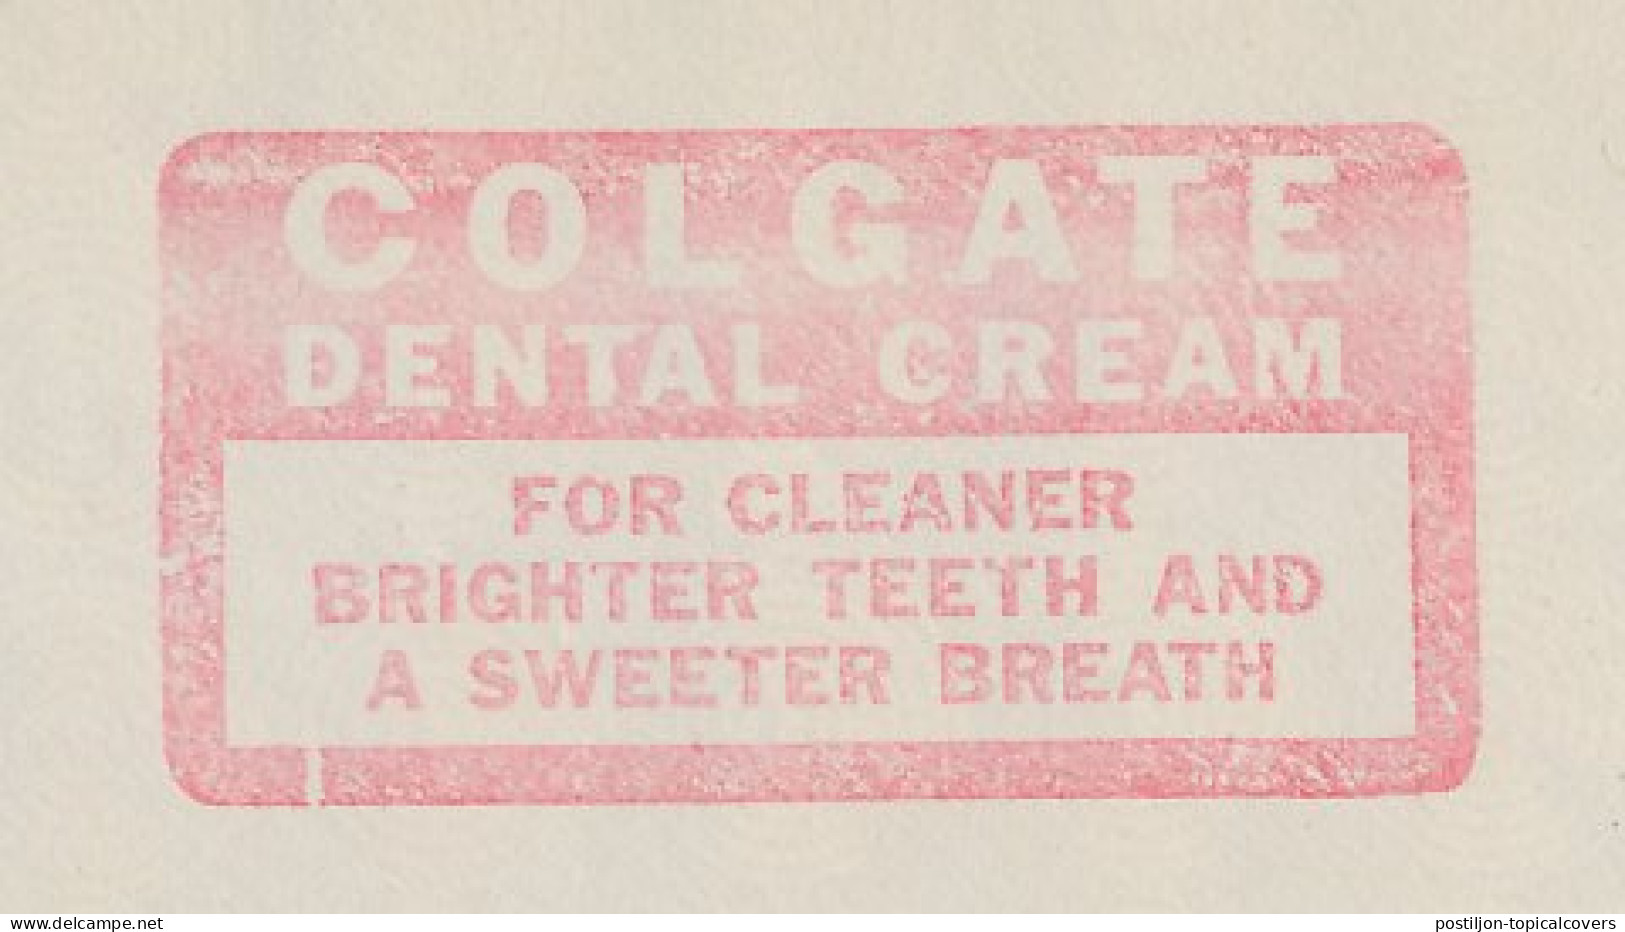 Meter Top Cut USA 1939 Dental Cream - Colgate - Medicine